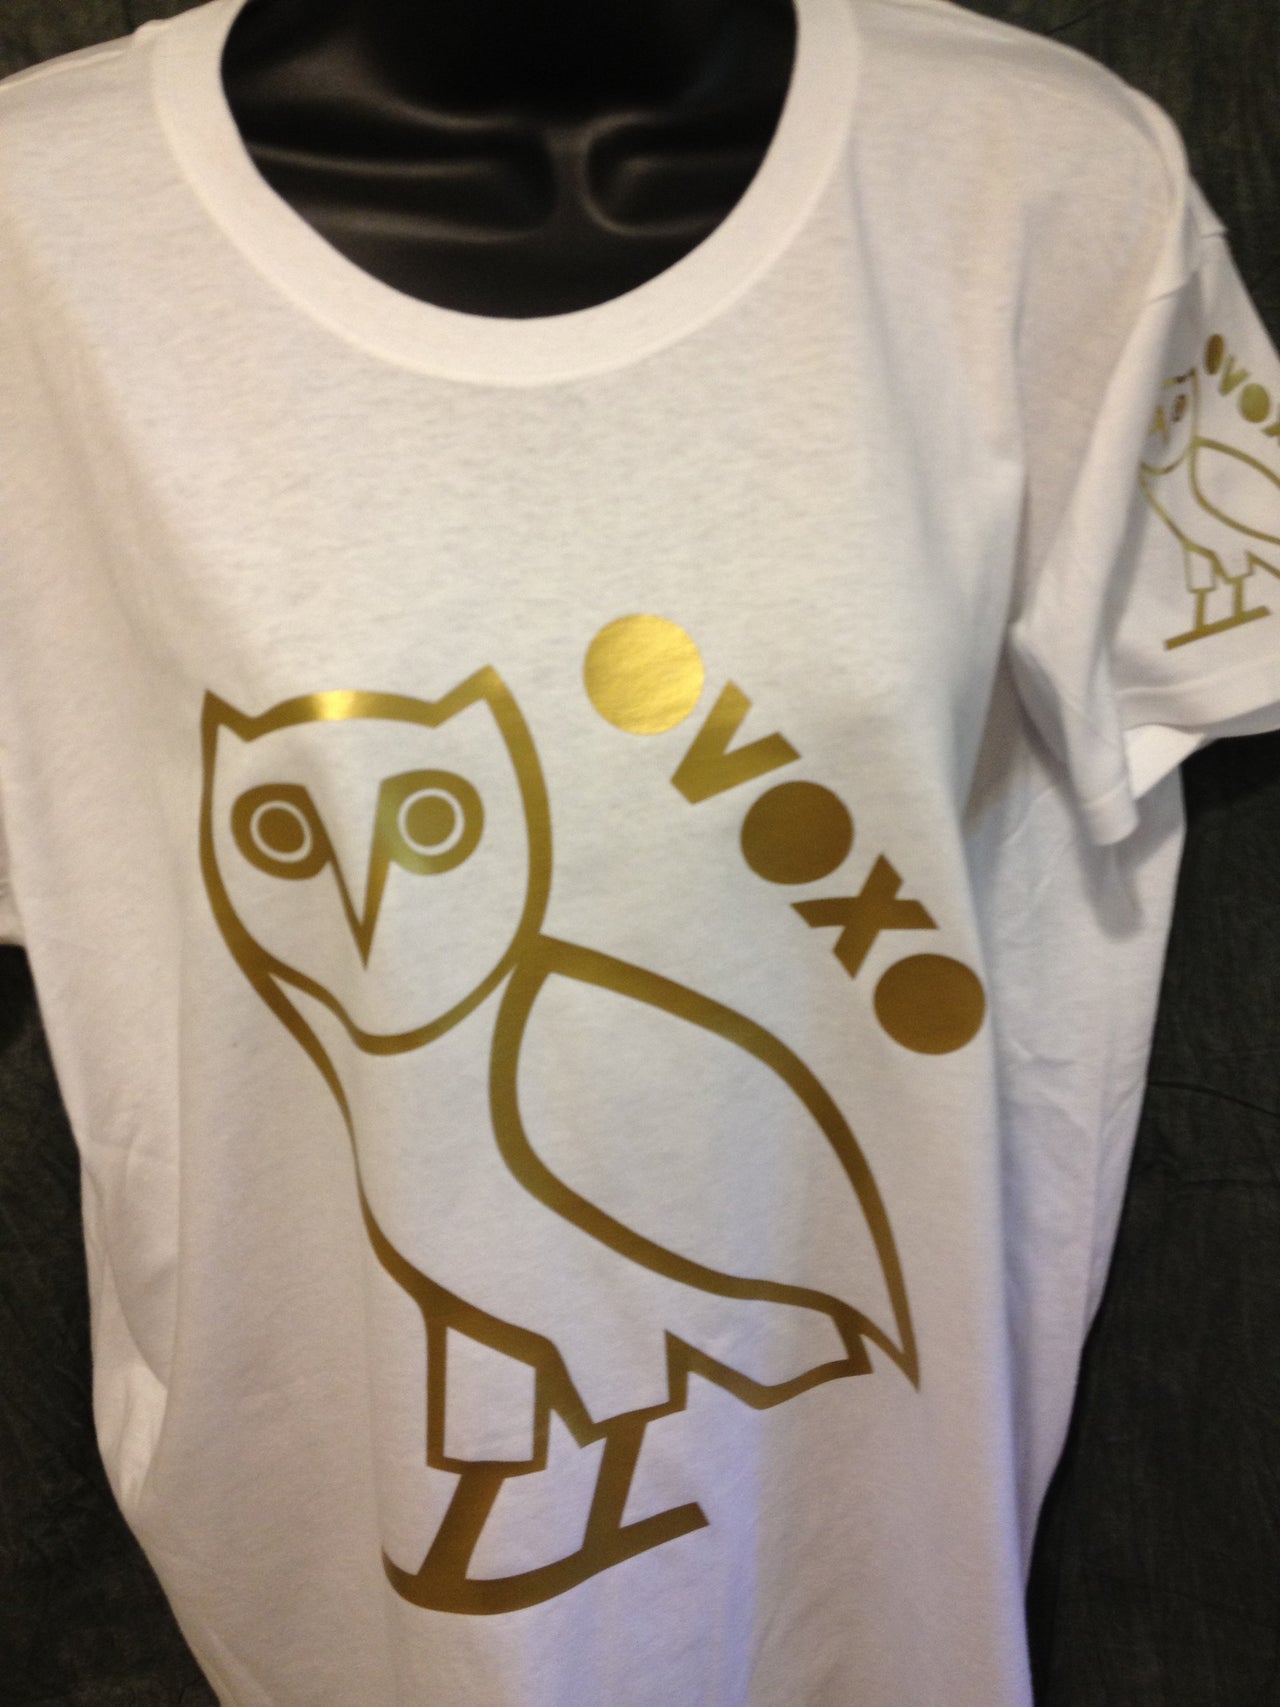 Ovo Drake October's Very Own Ovoxo Owl Gang Girls Tshirt: Gold Print on White Womens Tshirt - TshirtNow.net - 1